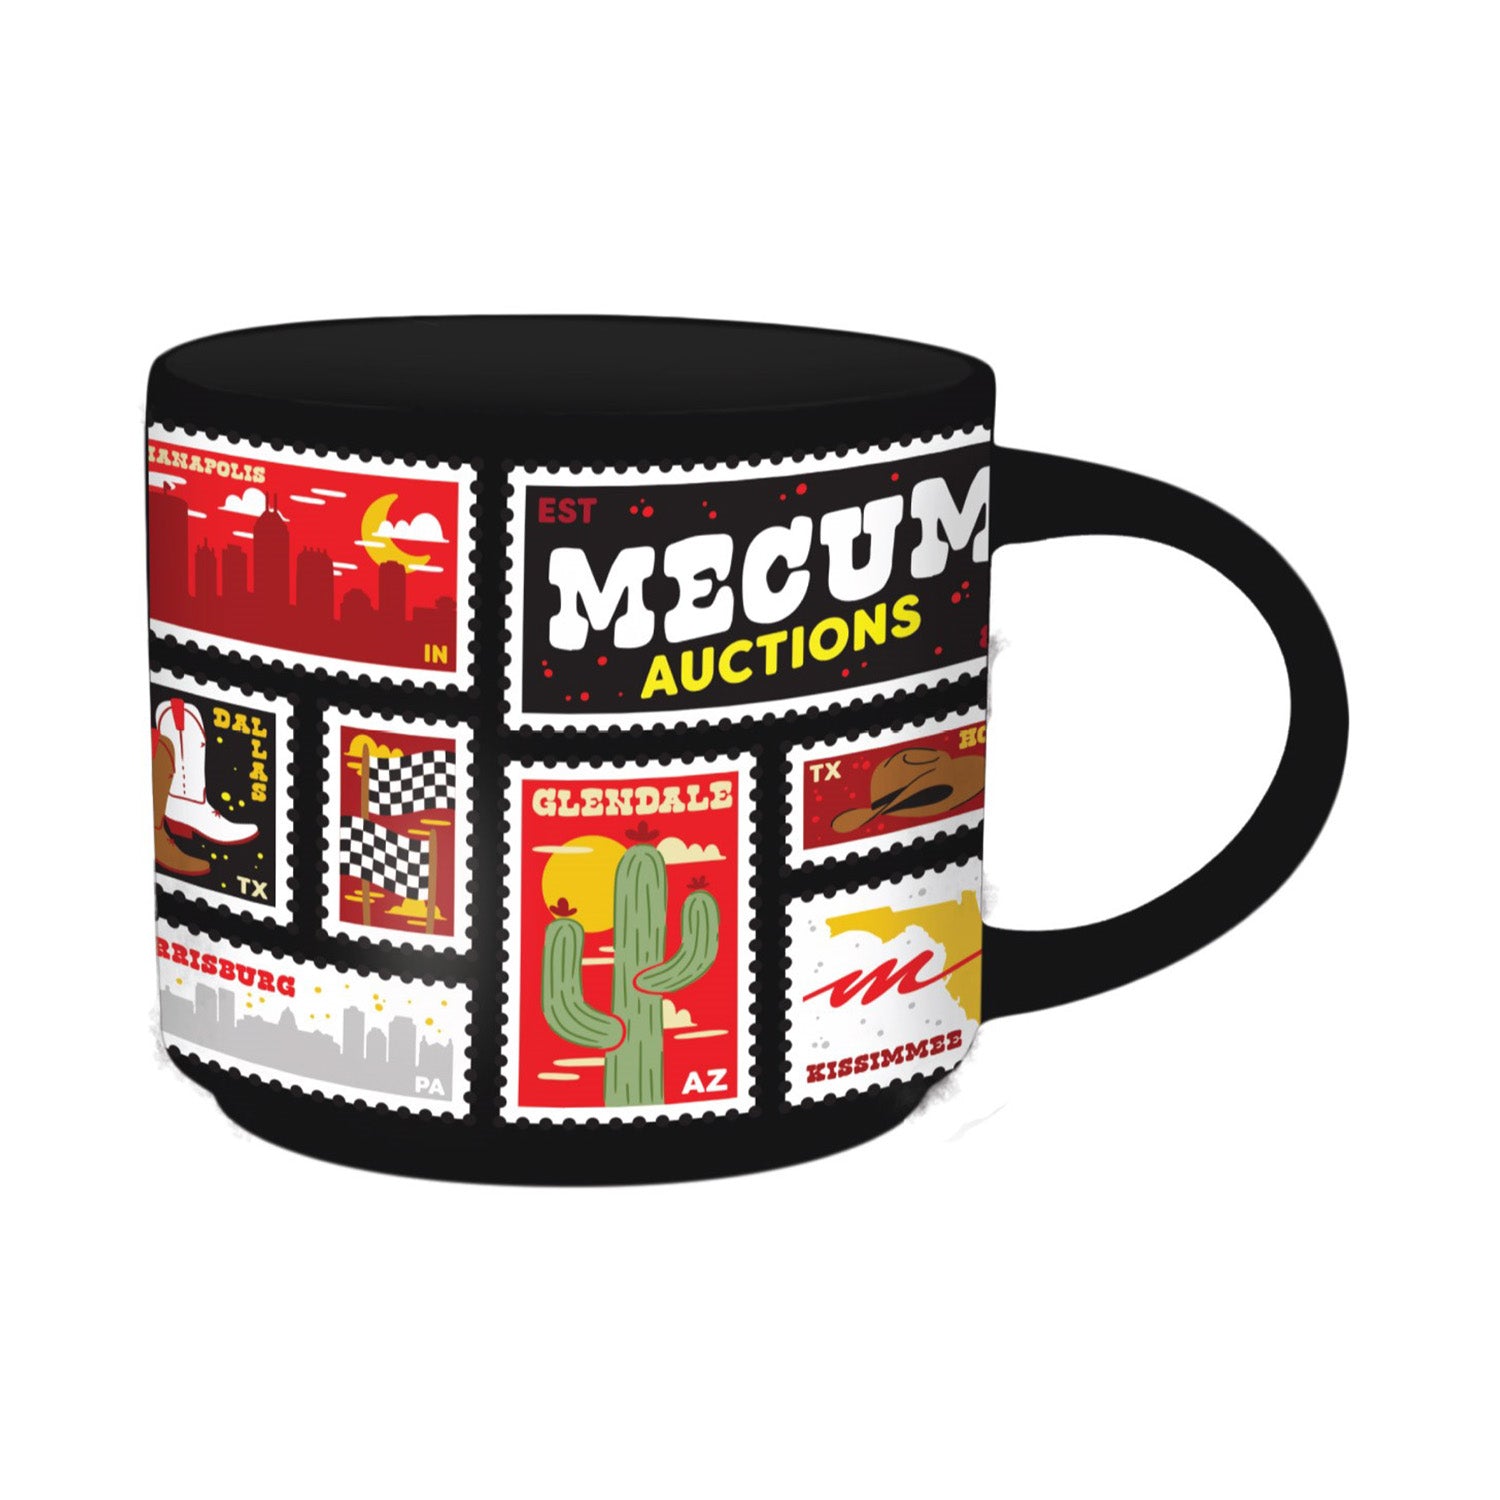 Mecum Auction Black Tour Mug - Duel Sided View